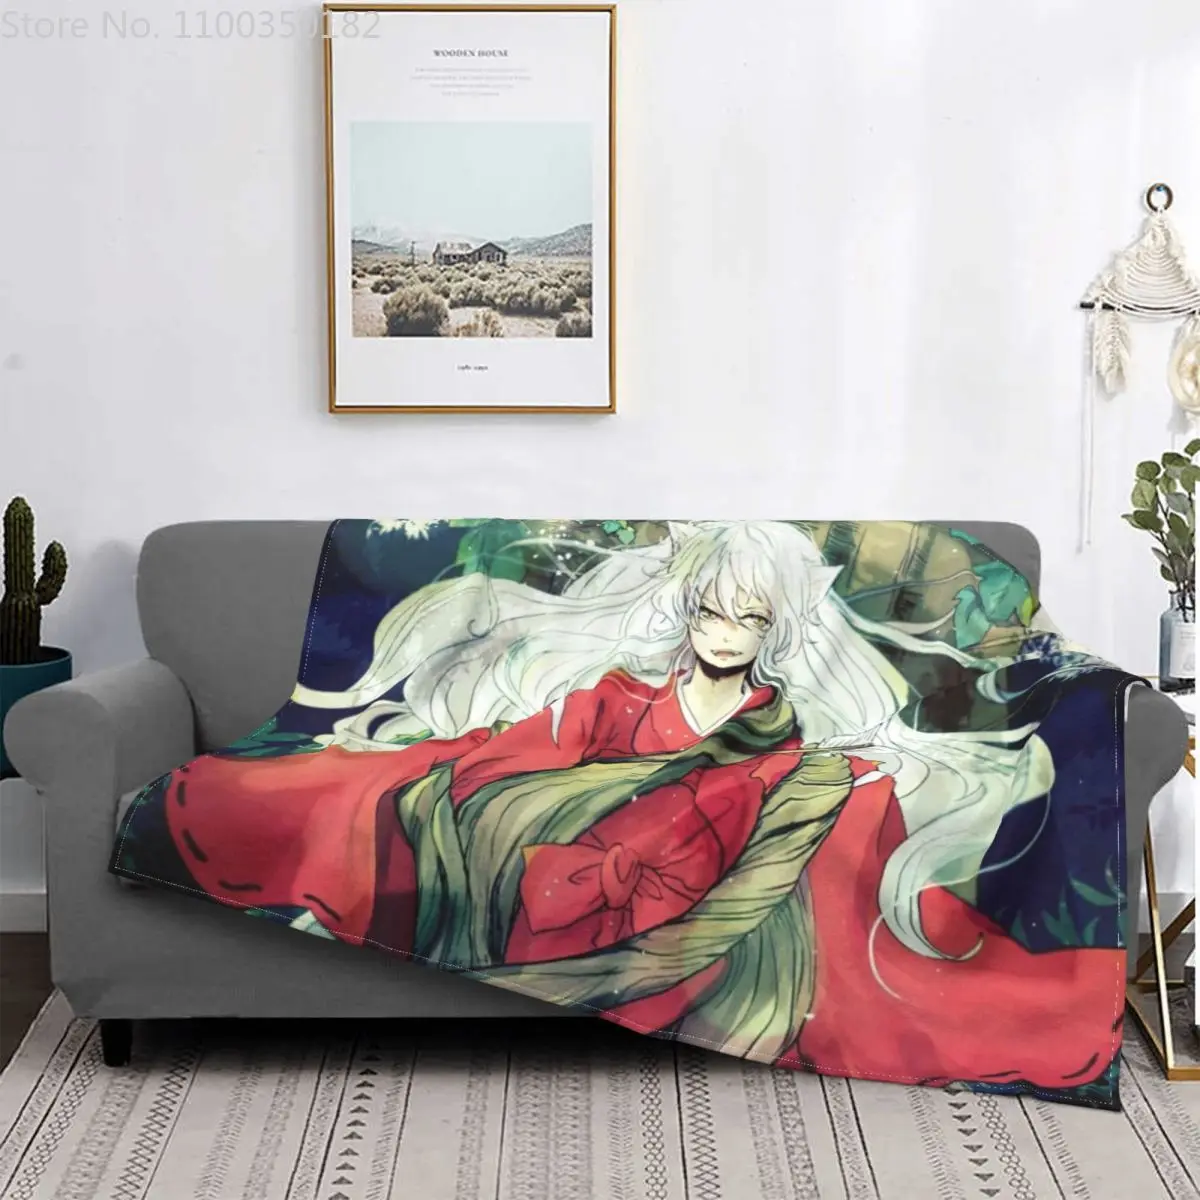 

Classical Japanese Anime Inuyasha Blanket 3D Cartoon Printed Blanket Anime Character Blanket Flannel Blankets Sofa Blanket Decor